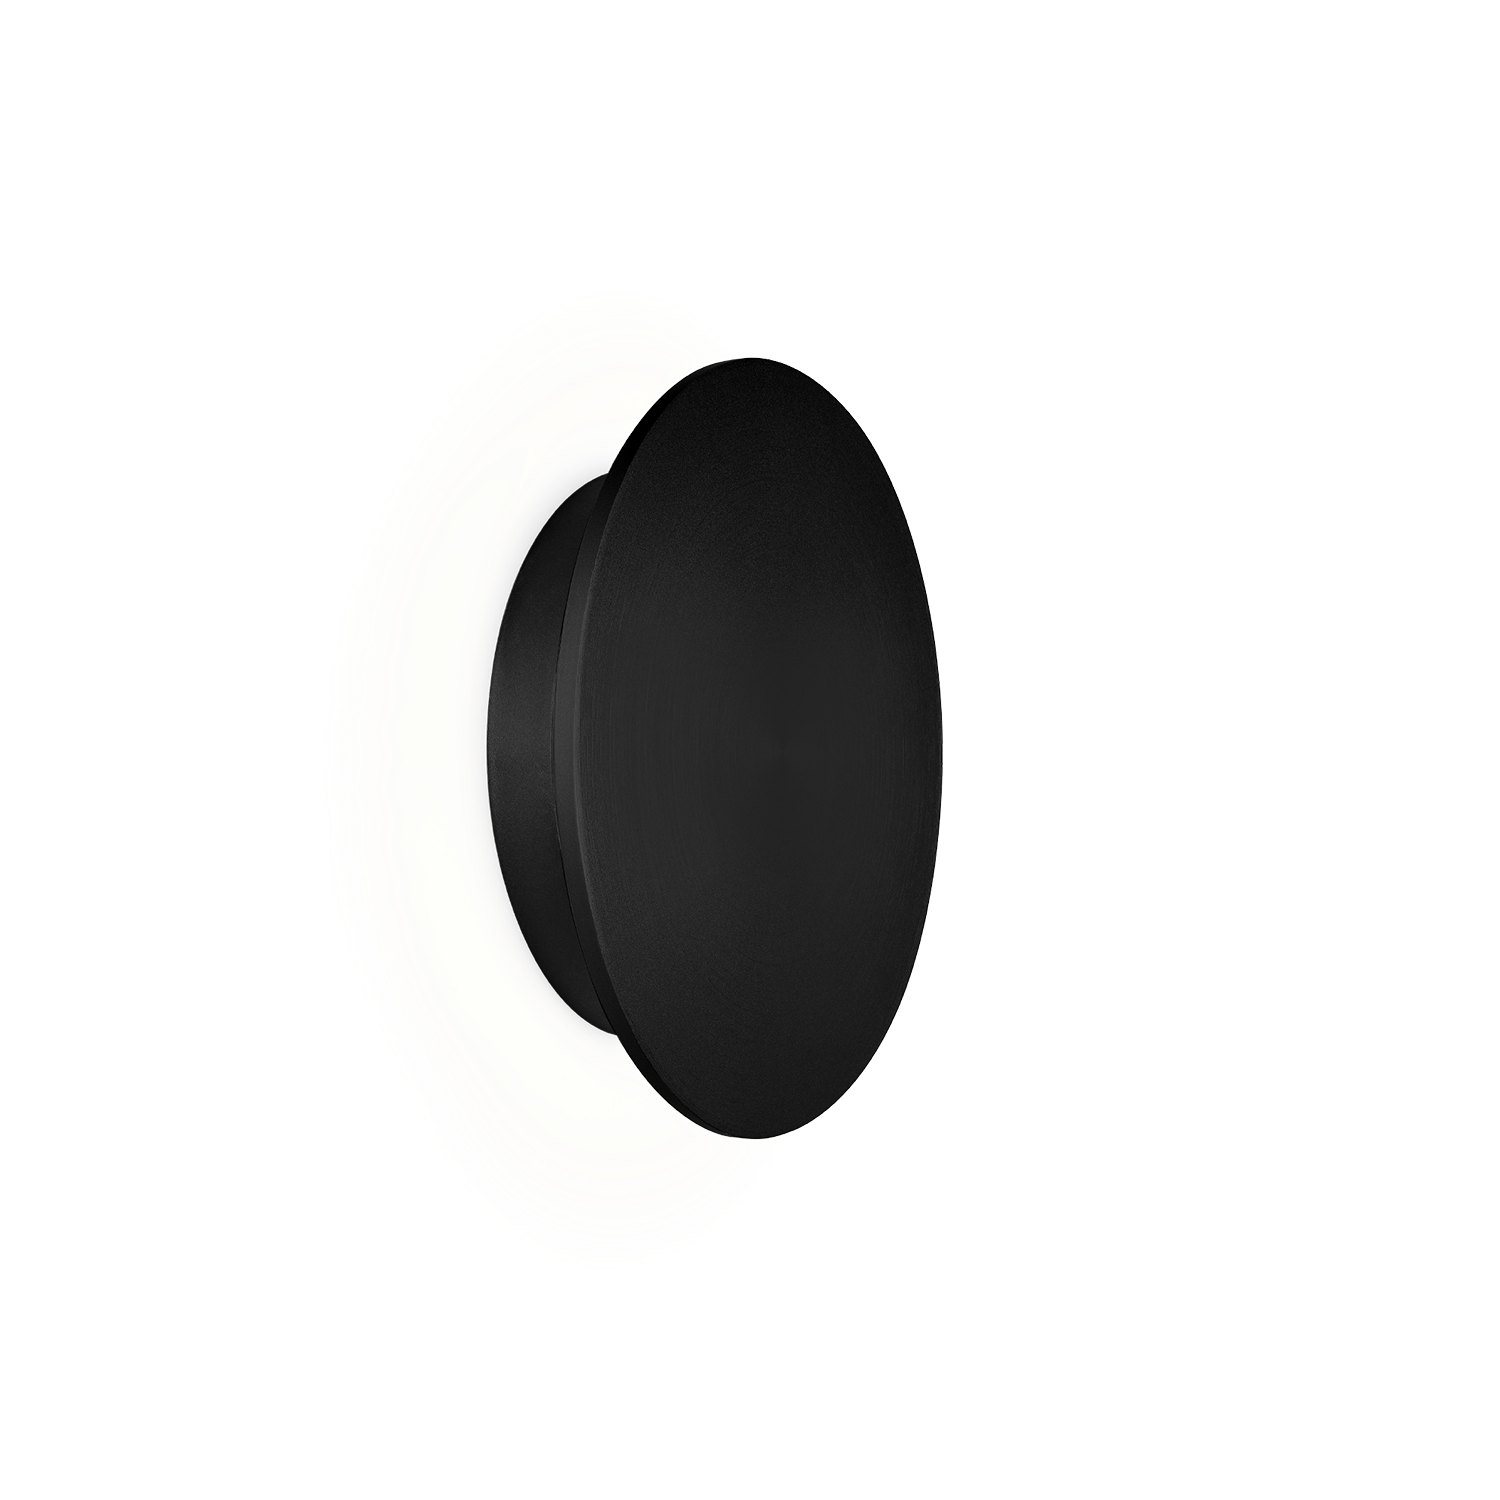 MILES-2.0-ROUND-black-texture